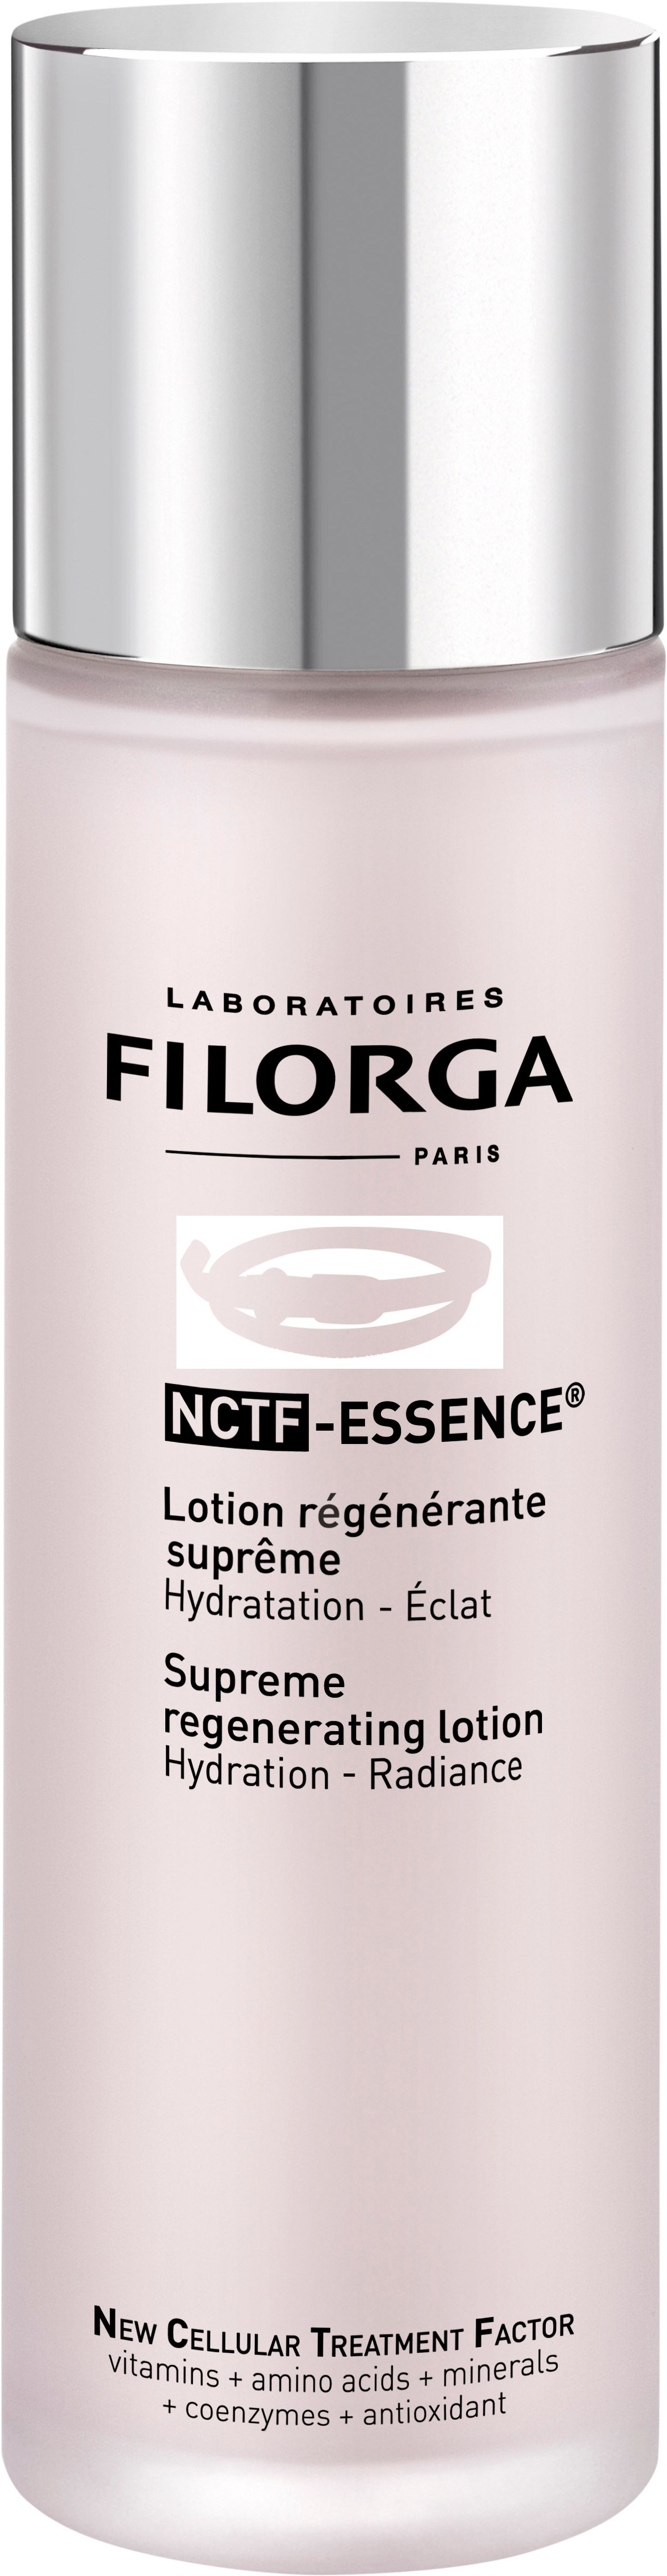 Filorga - NCTF Essence Lotion 150 ml